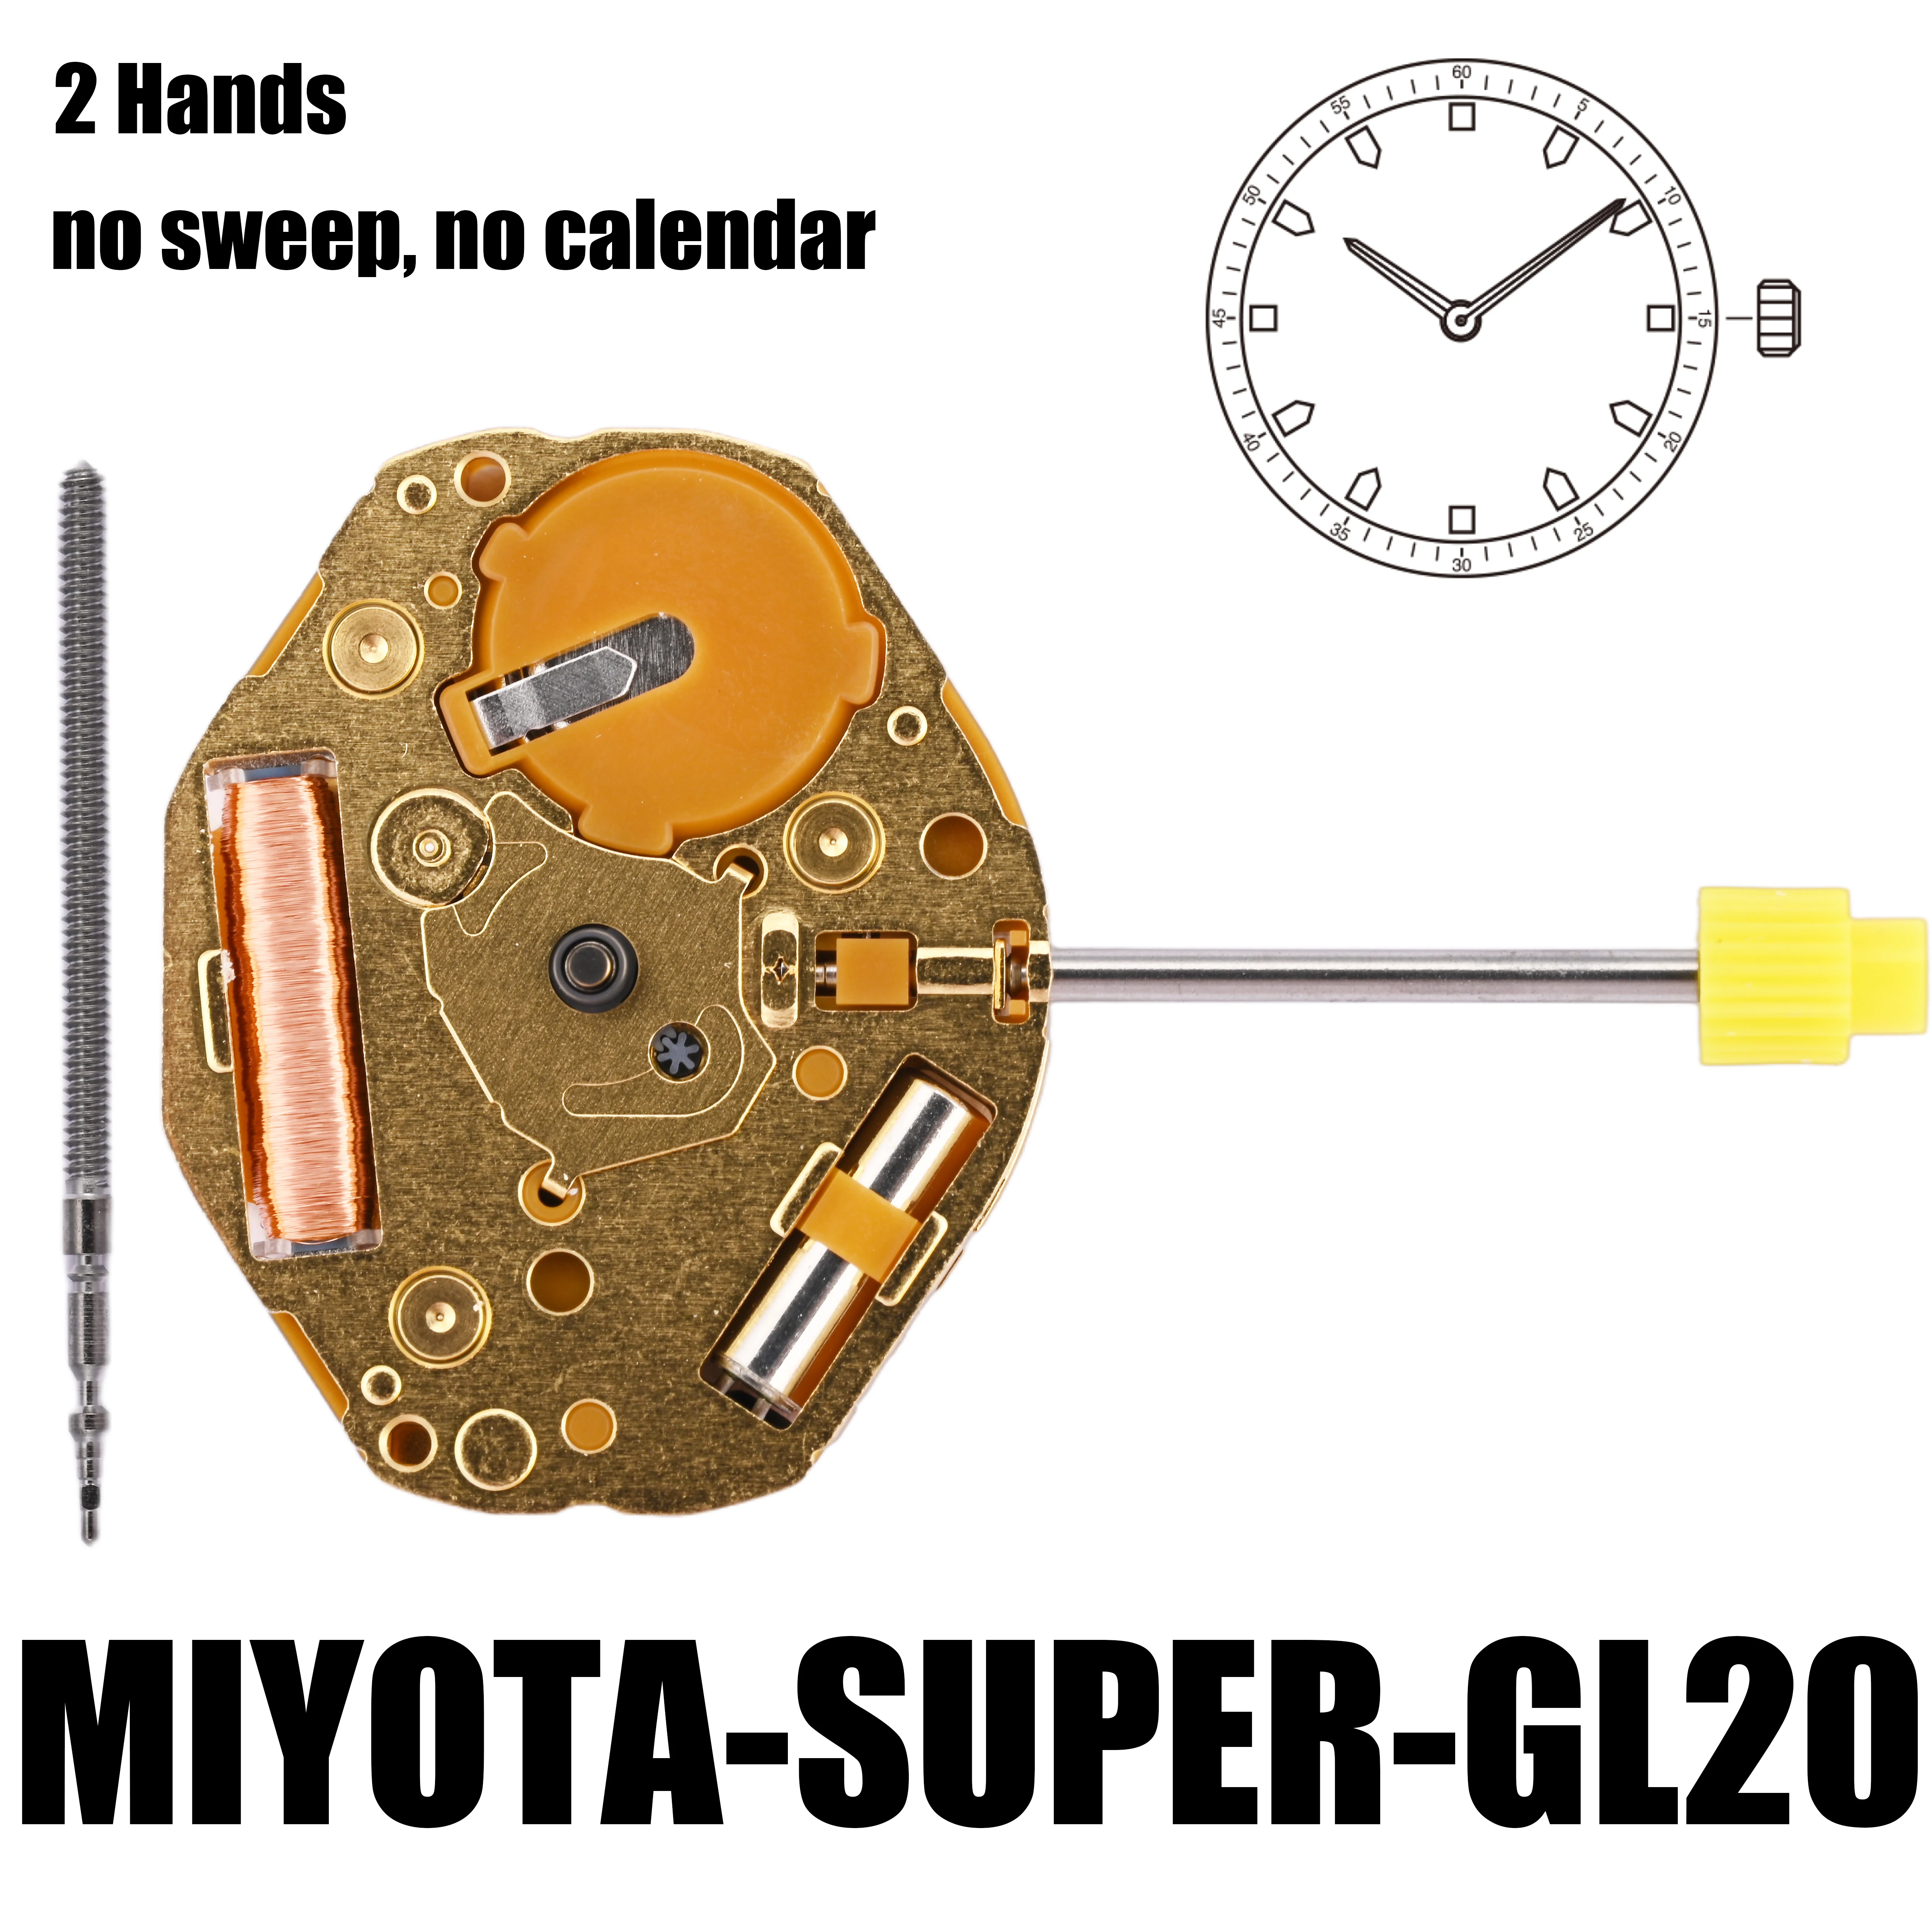 

Miyota Super GL20Quartz Movement Miyota gl20 YOUR ENGINE- Metal movement made in Japan.